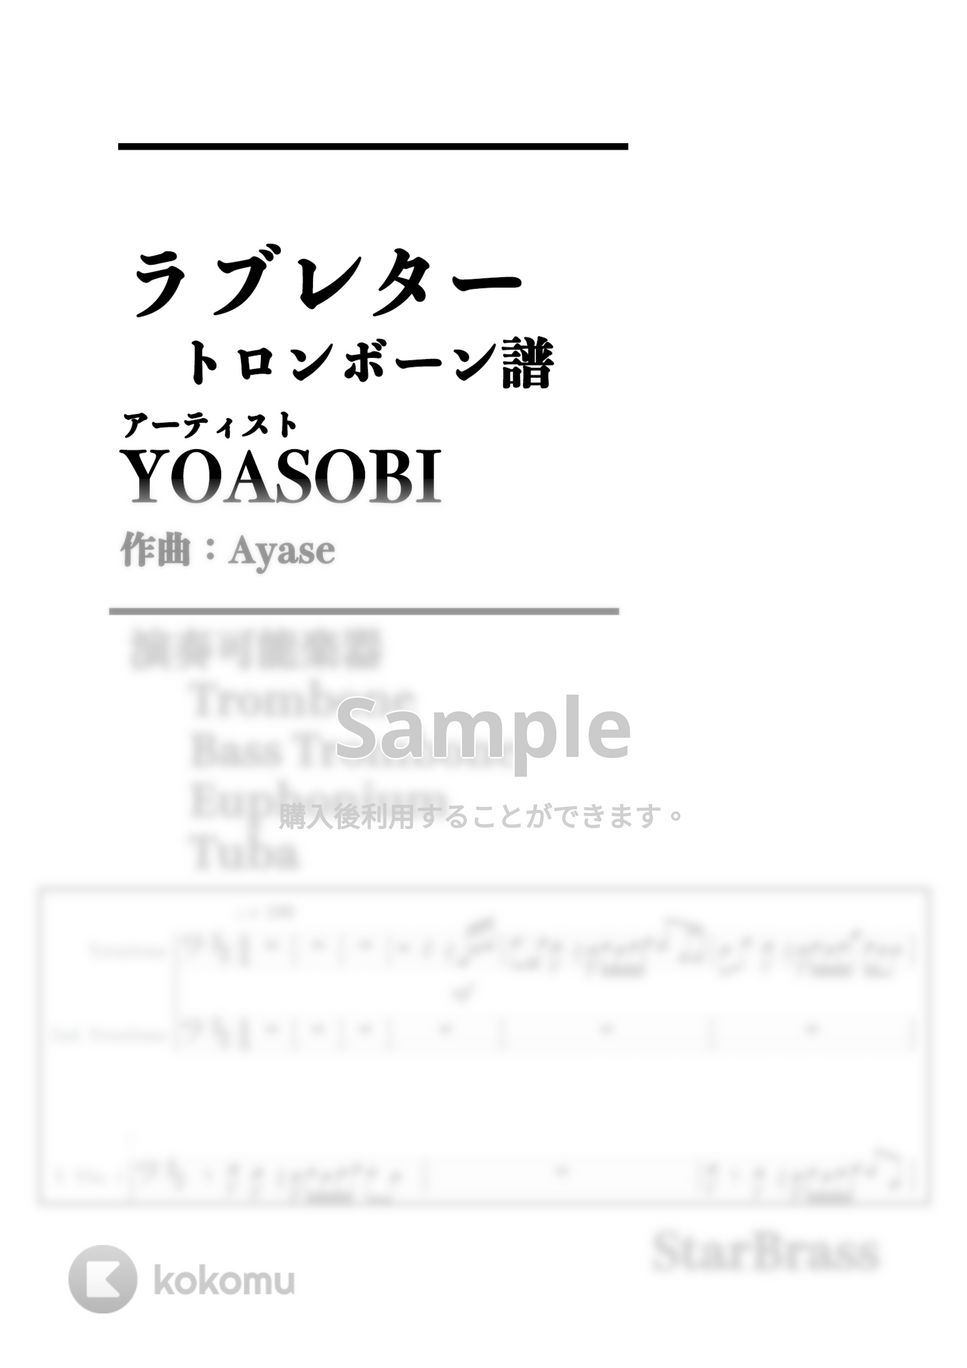 YOASOBI - ラブレター (-Trombone Solo- 原キー) by Creampuff